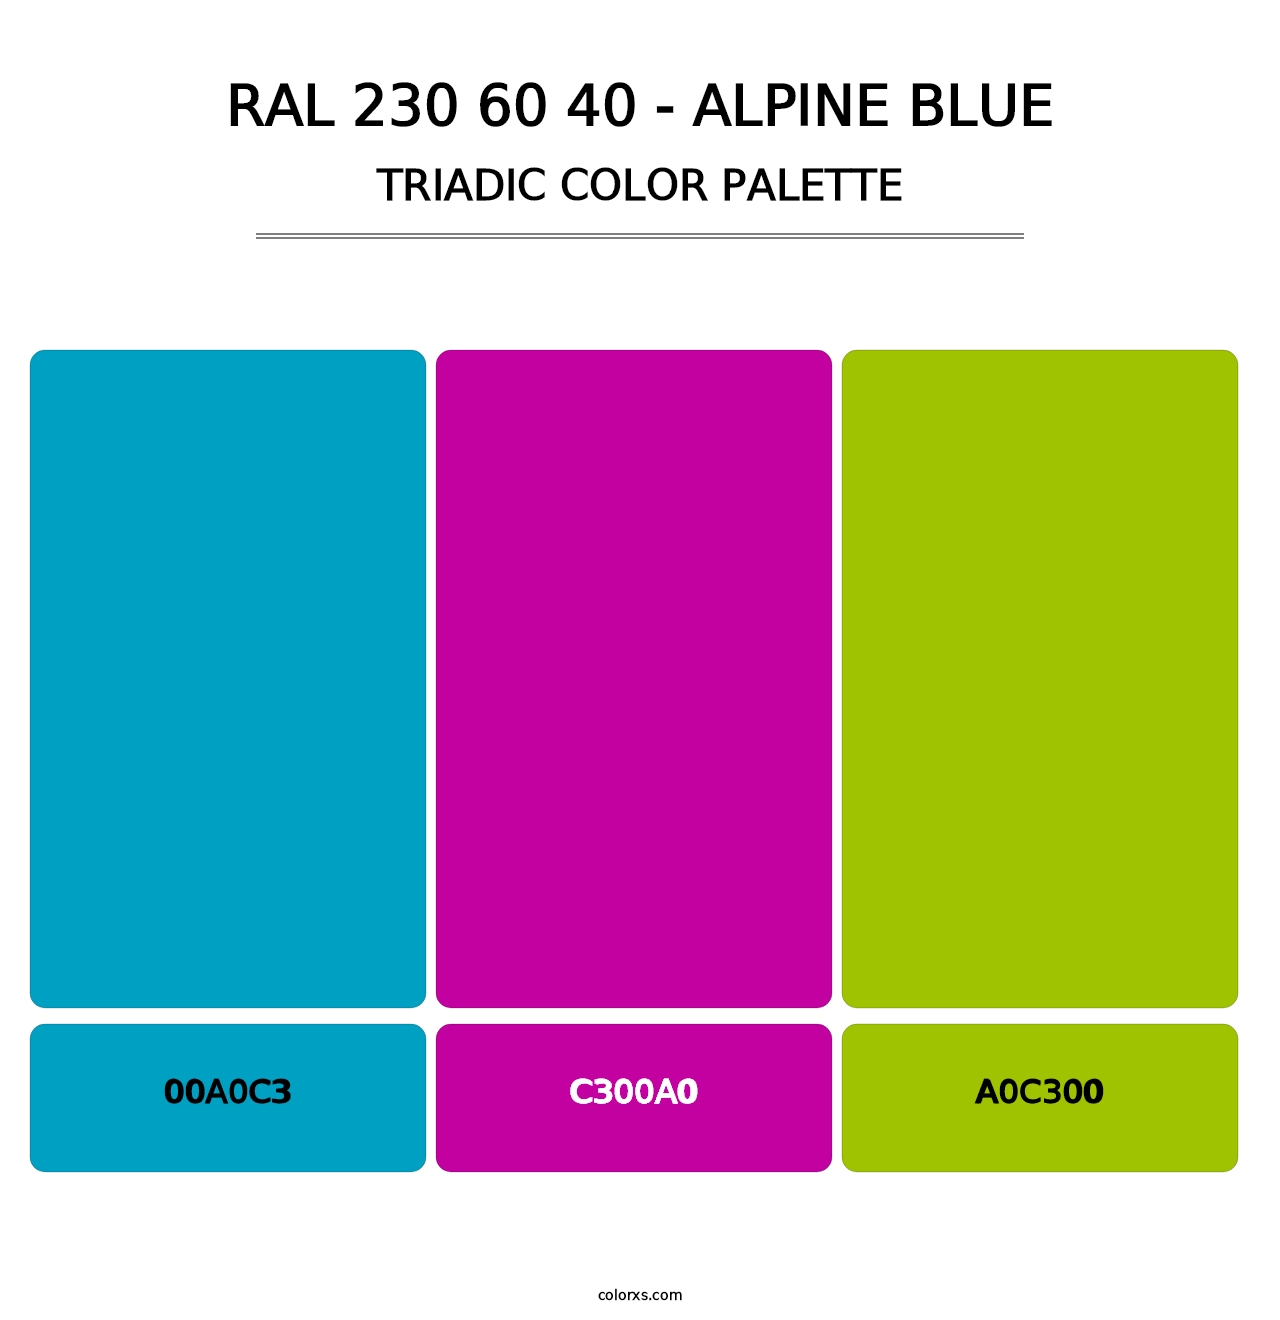 RAL 230 60 40 - Alpine Blue - Triadic Color Palette